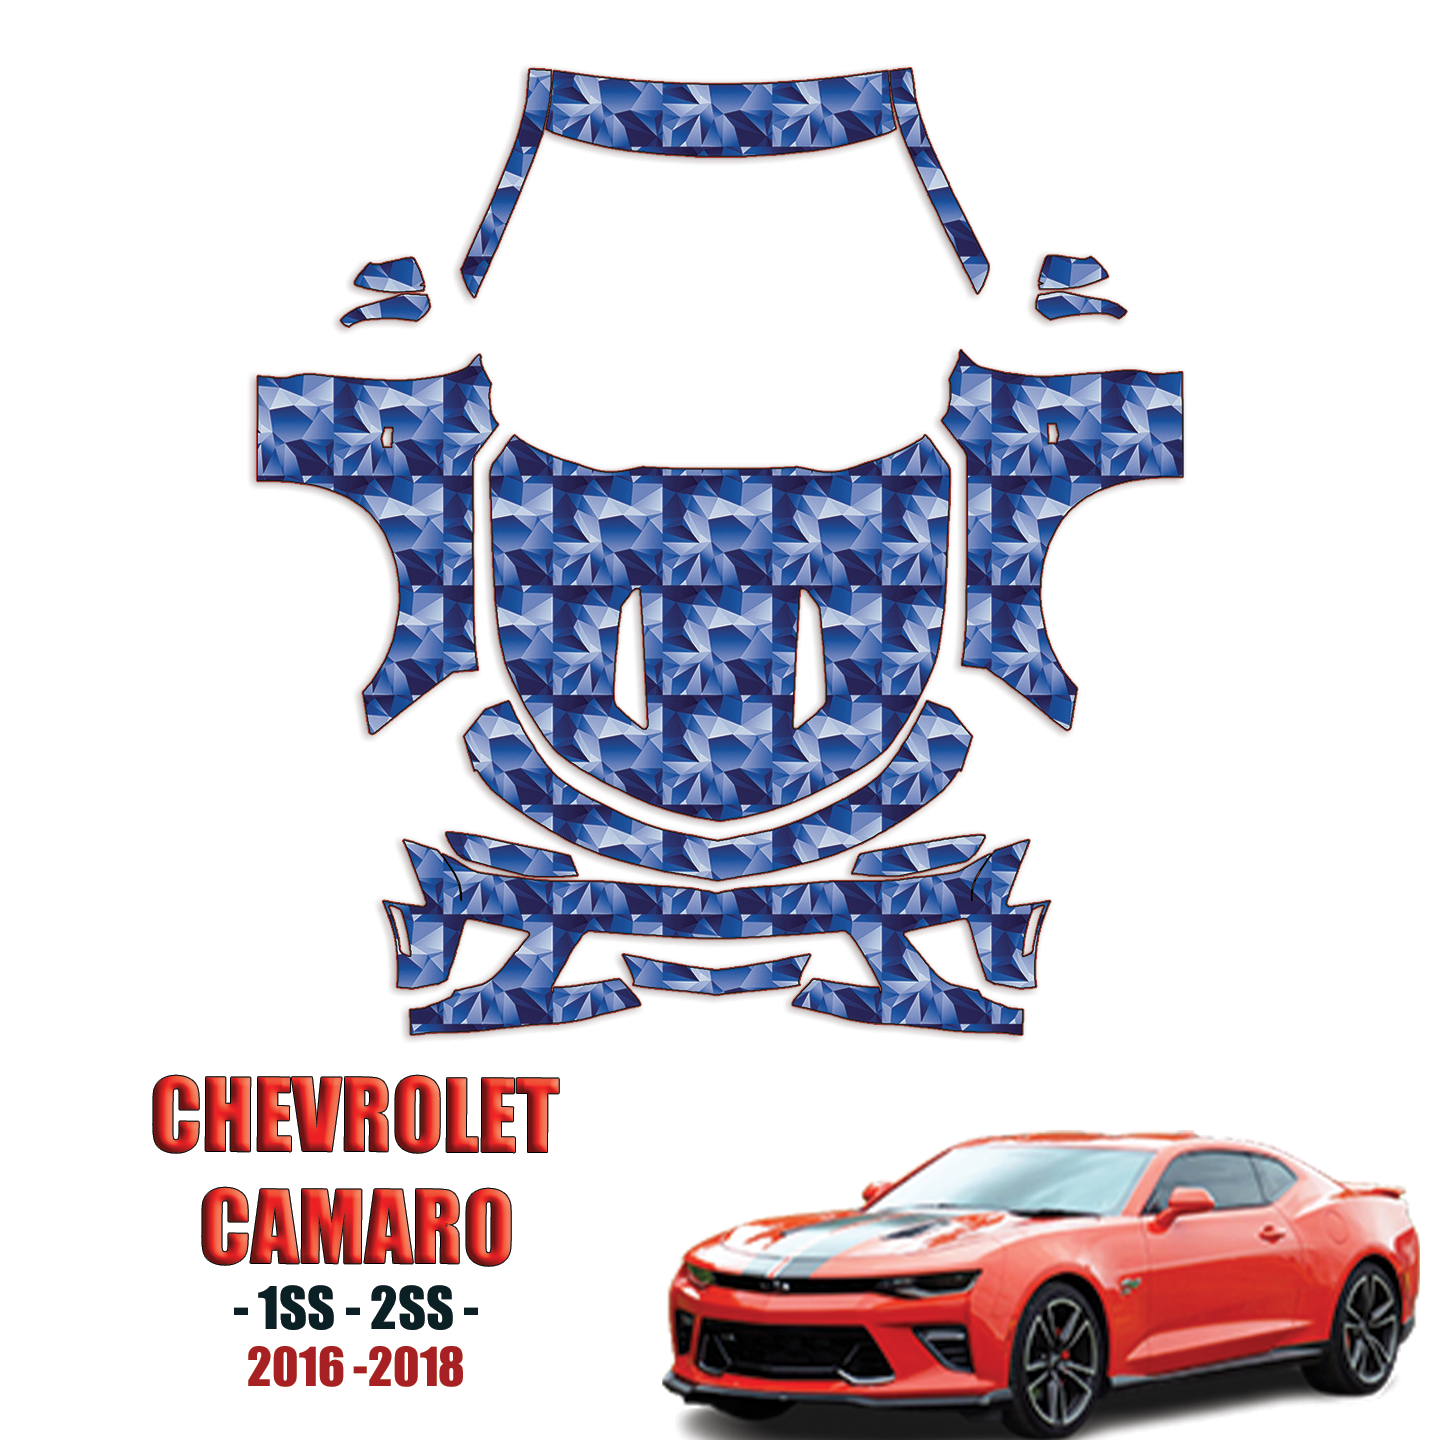 2016-2018 Chevrolet Camaro Precut Paint Protection PPF Kit – Full Front